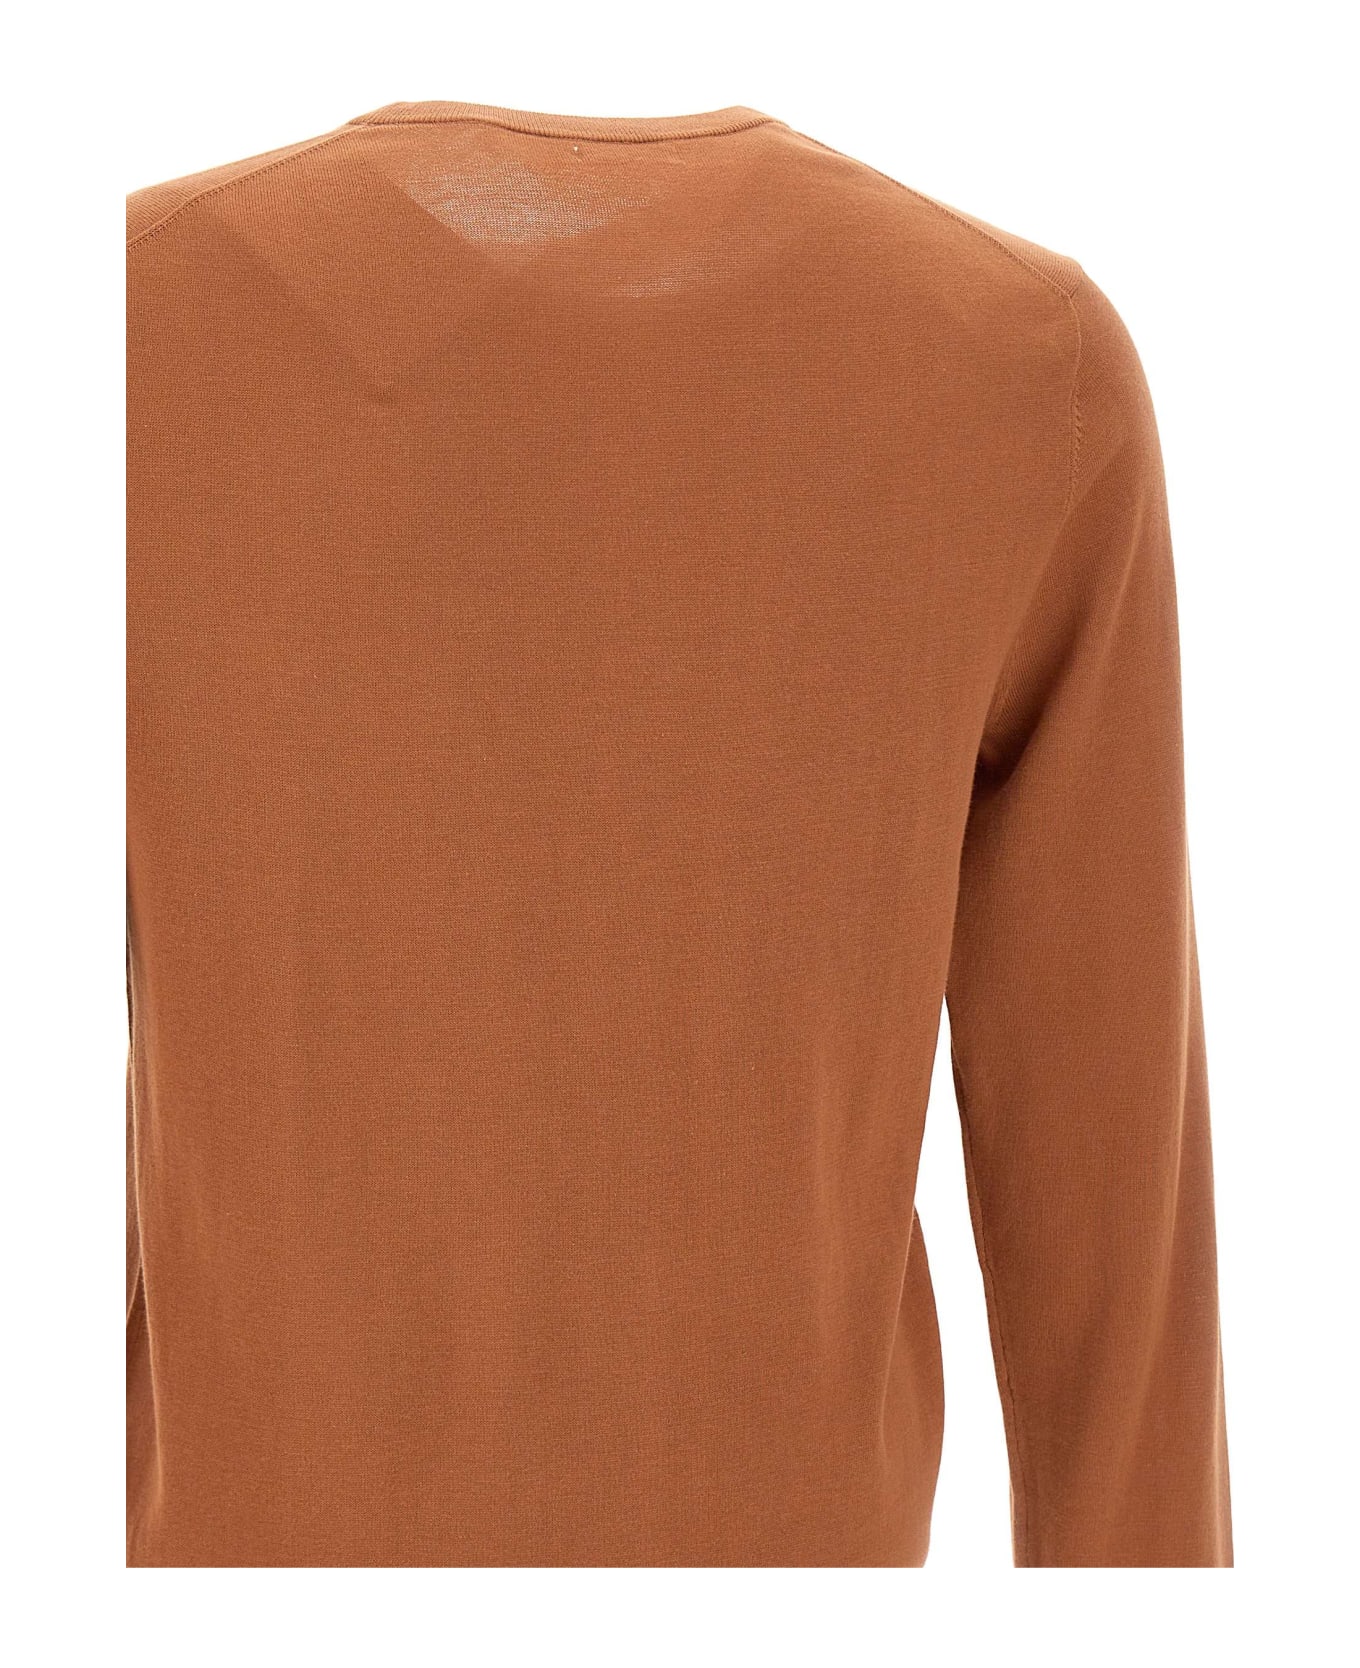 Sun 68 "solid" Cotton Sweater - BROWN ニットウェア